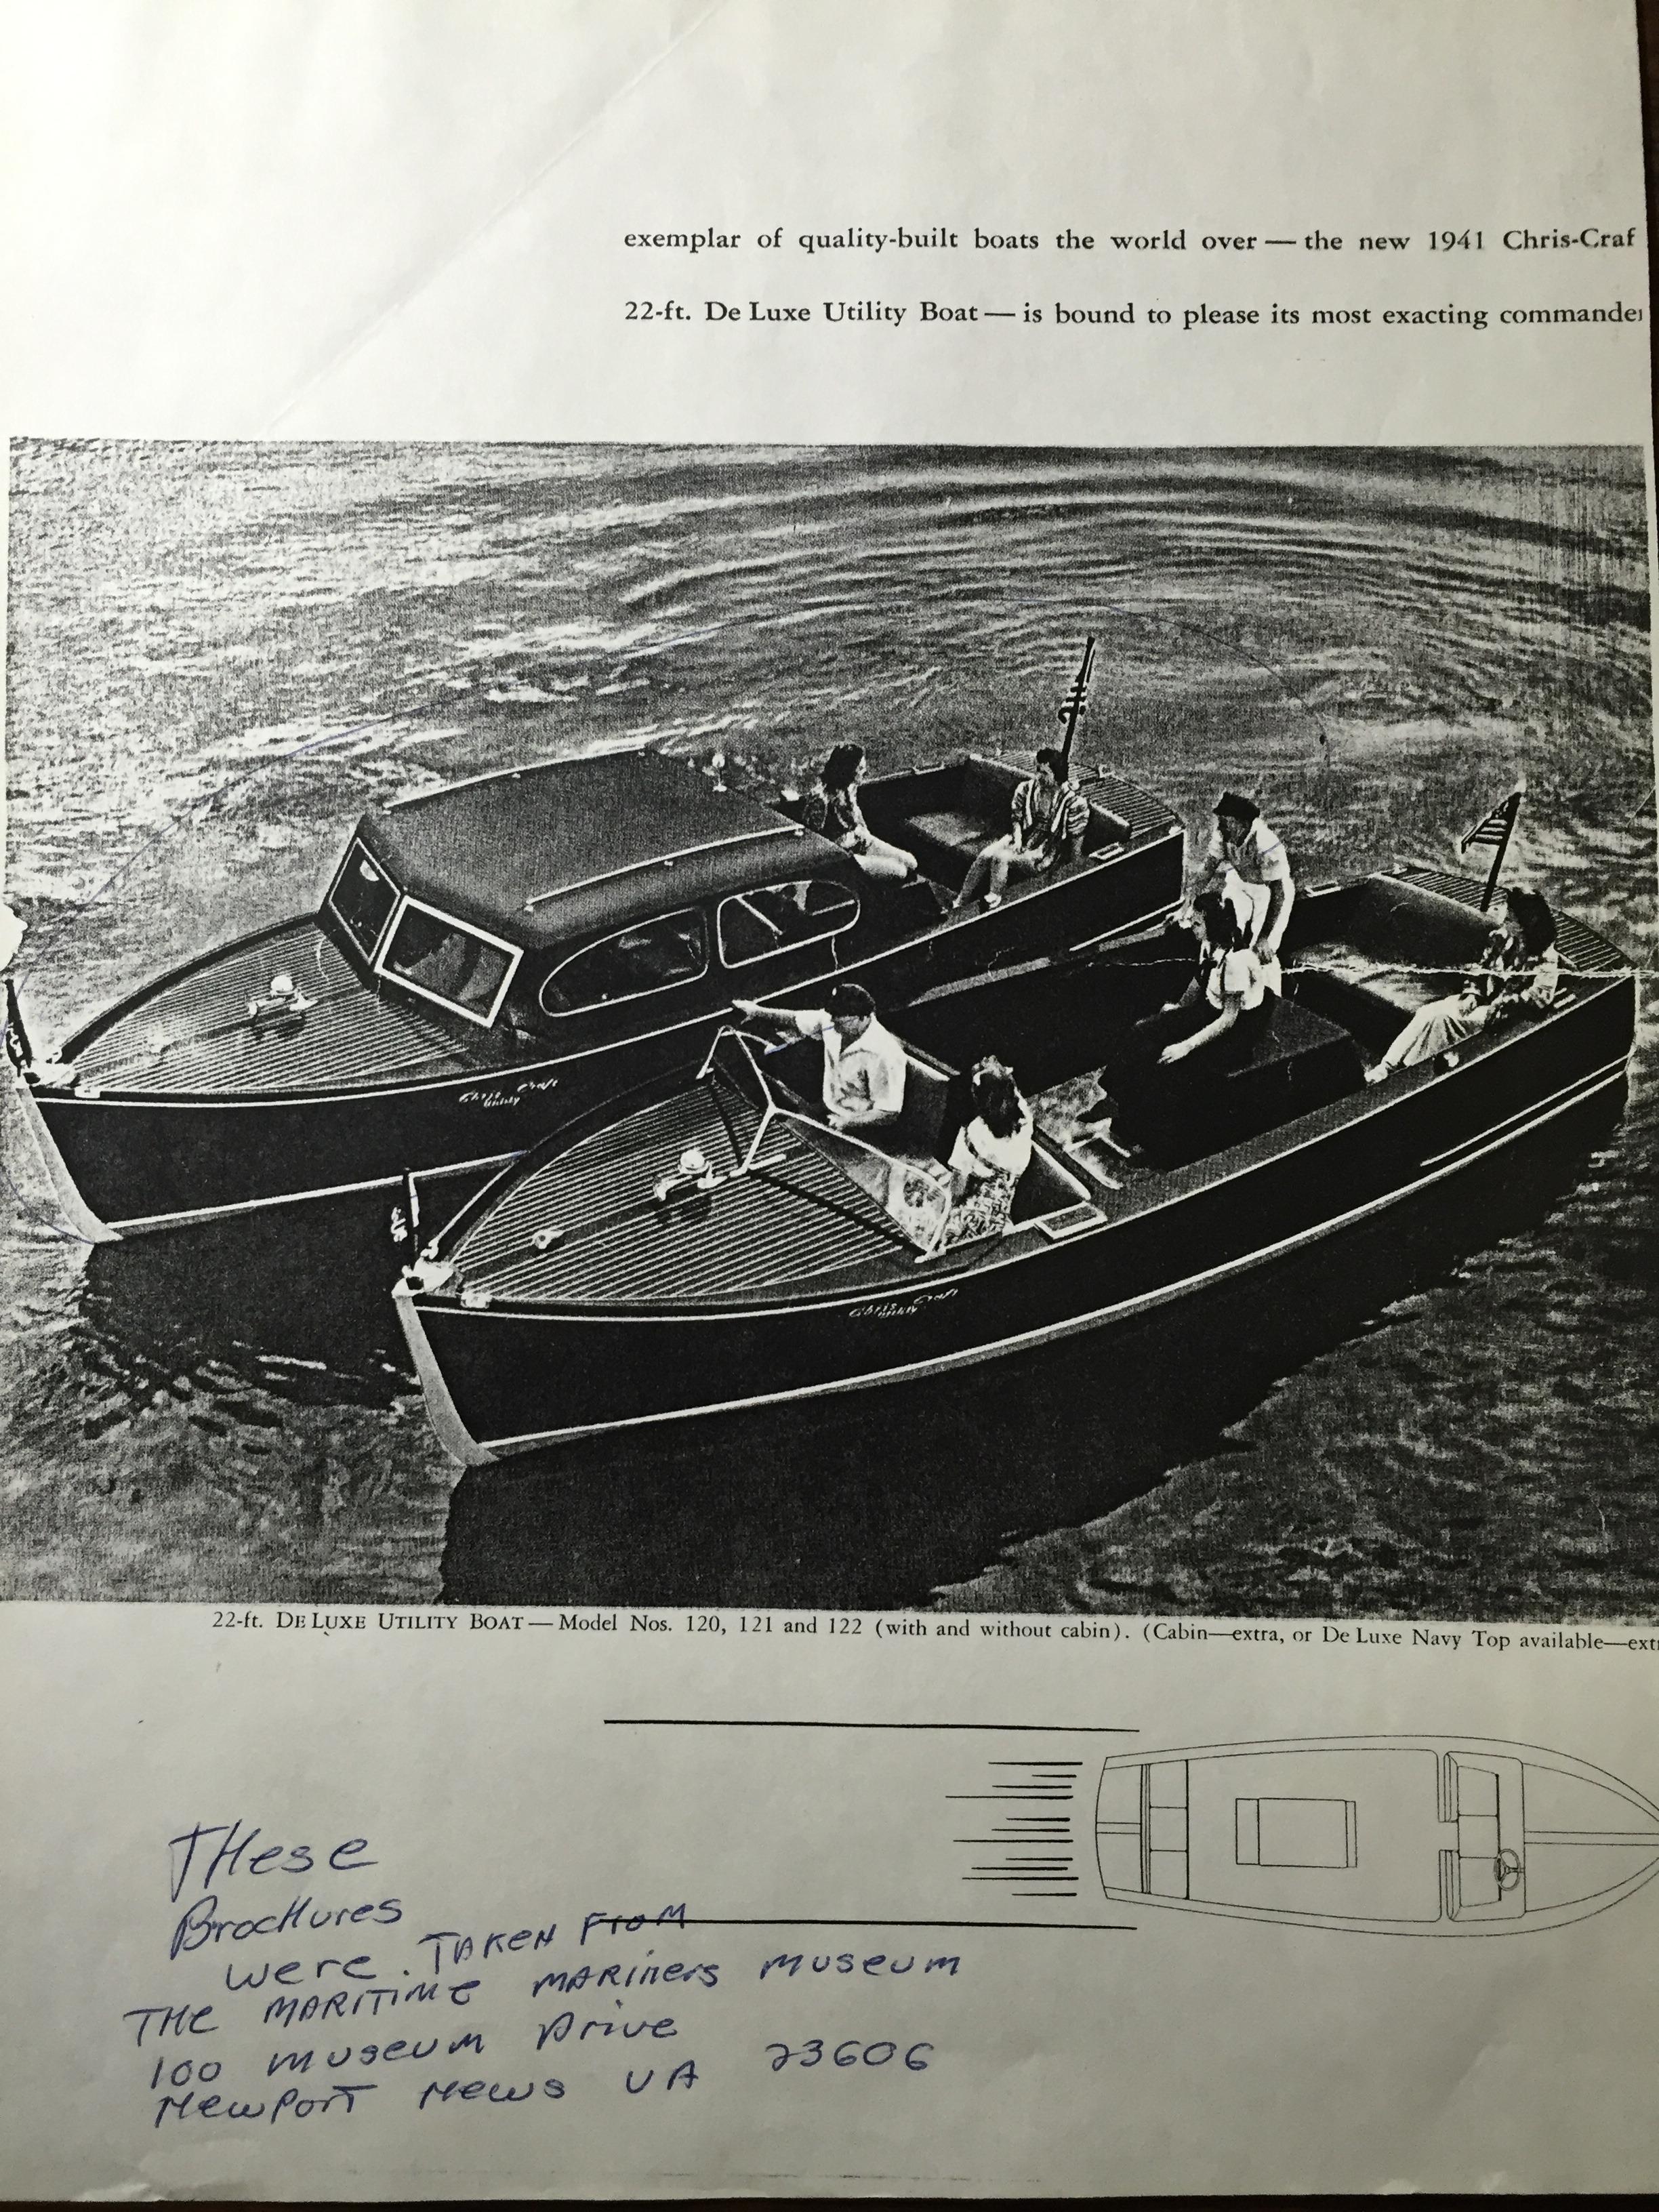 1940 Chris-Craft De Luxe Utility Boat